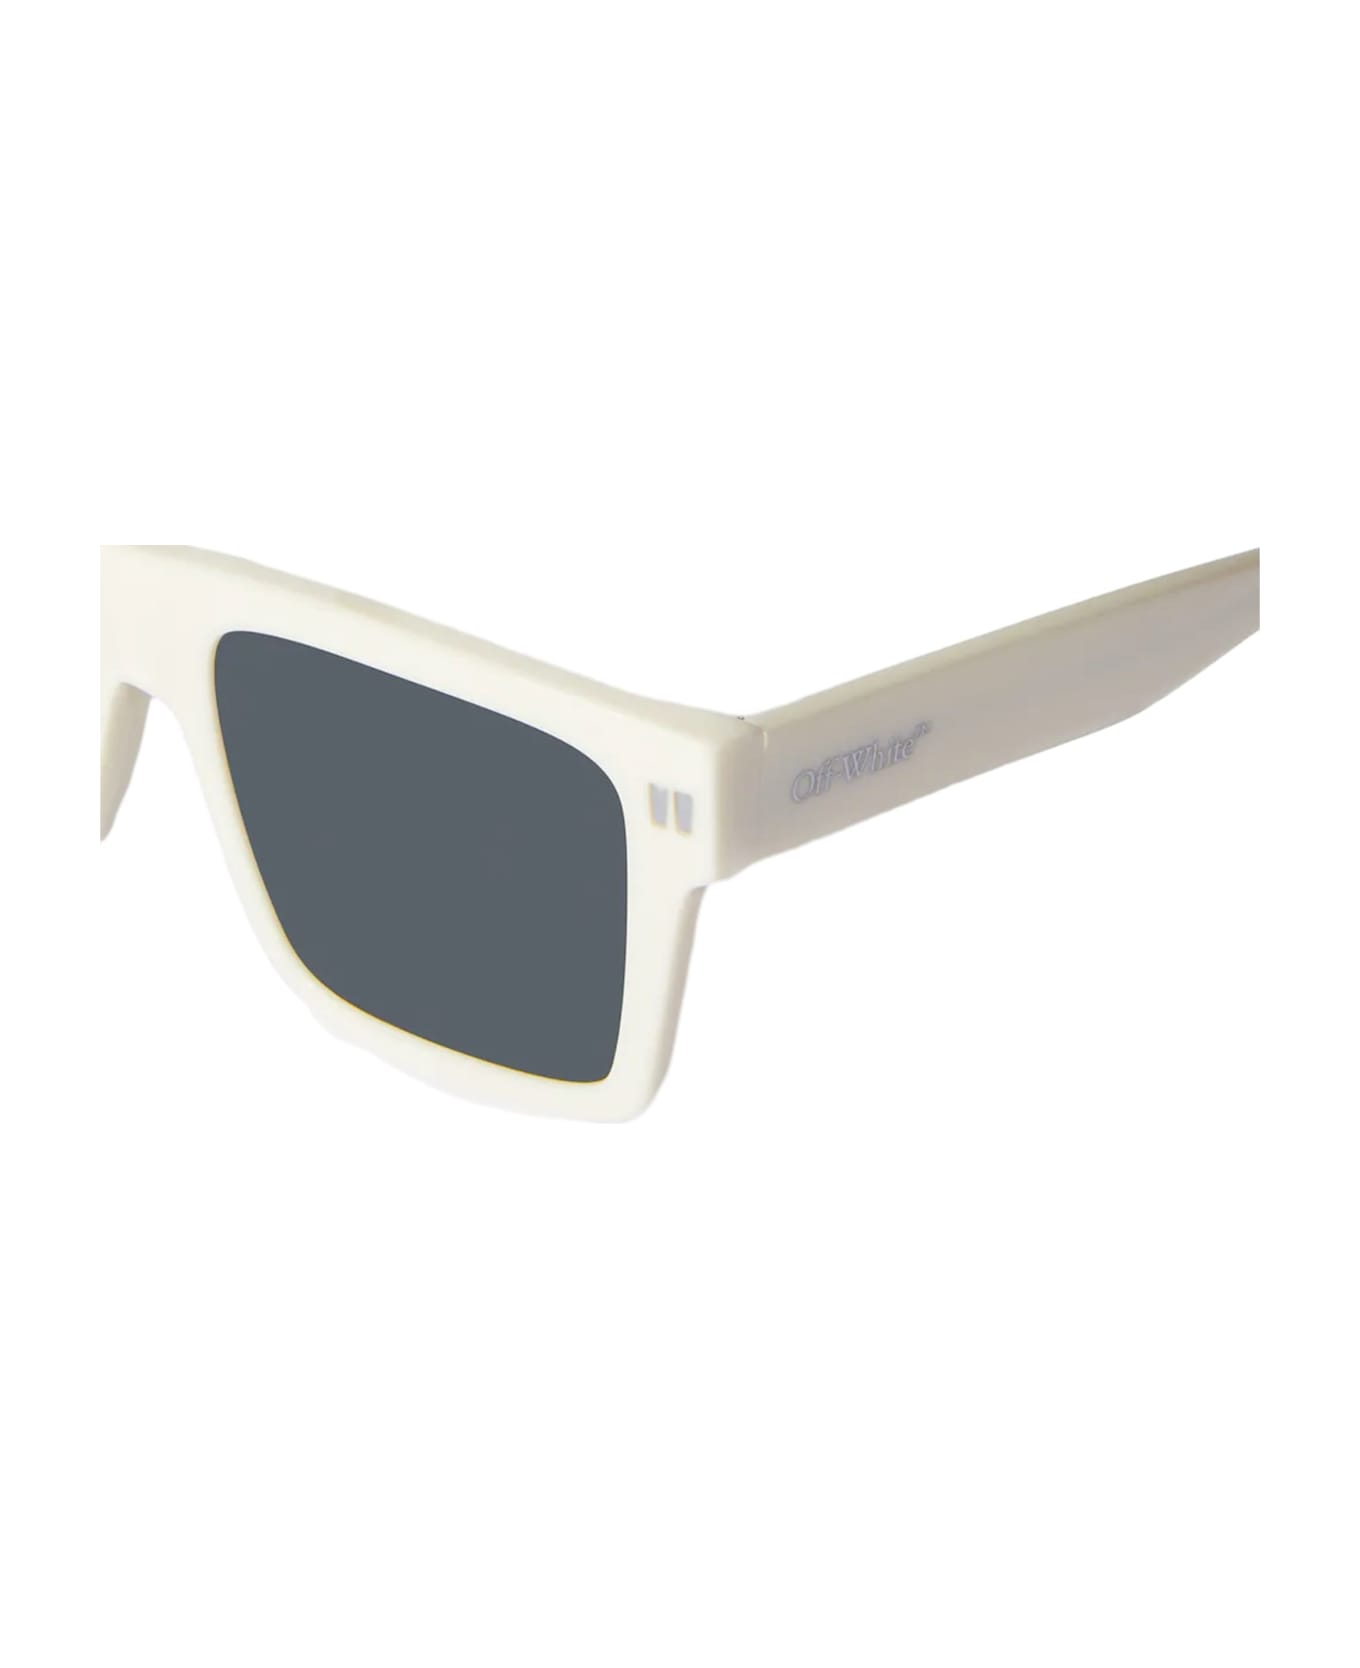 Off-White Lawton - White / Dark Grey Sunglasses - White